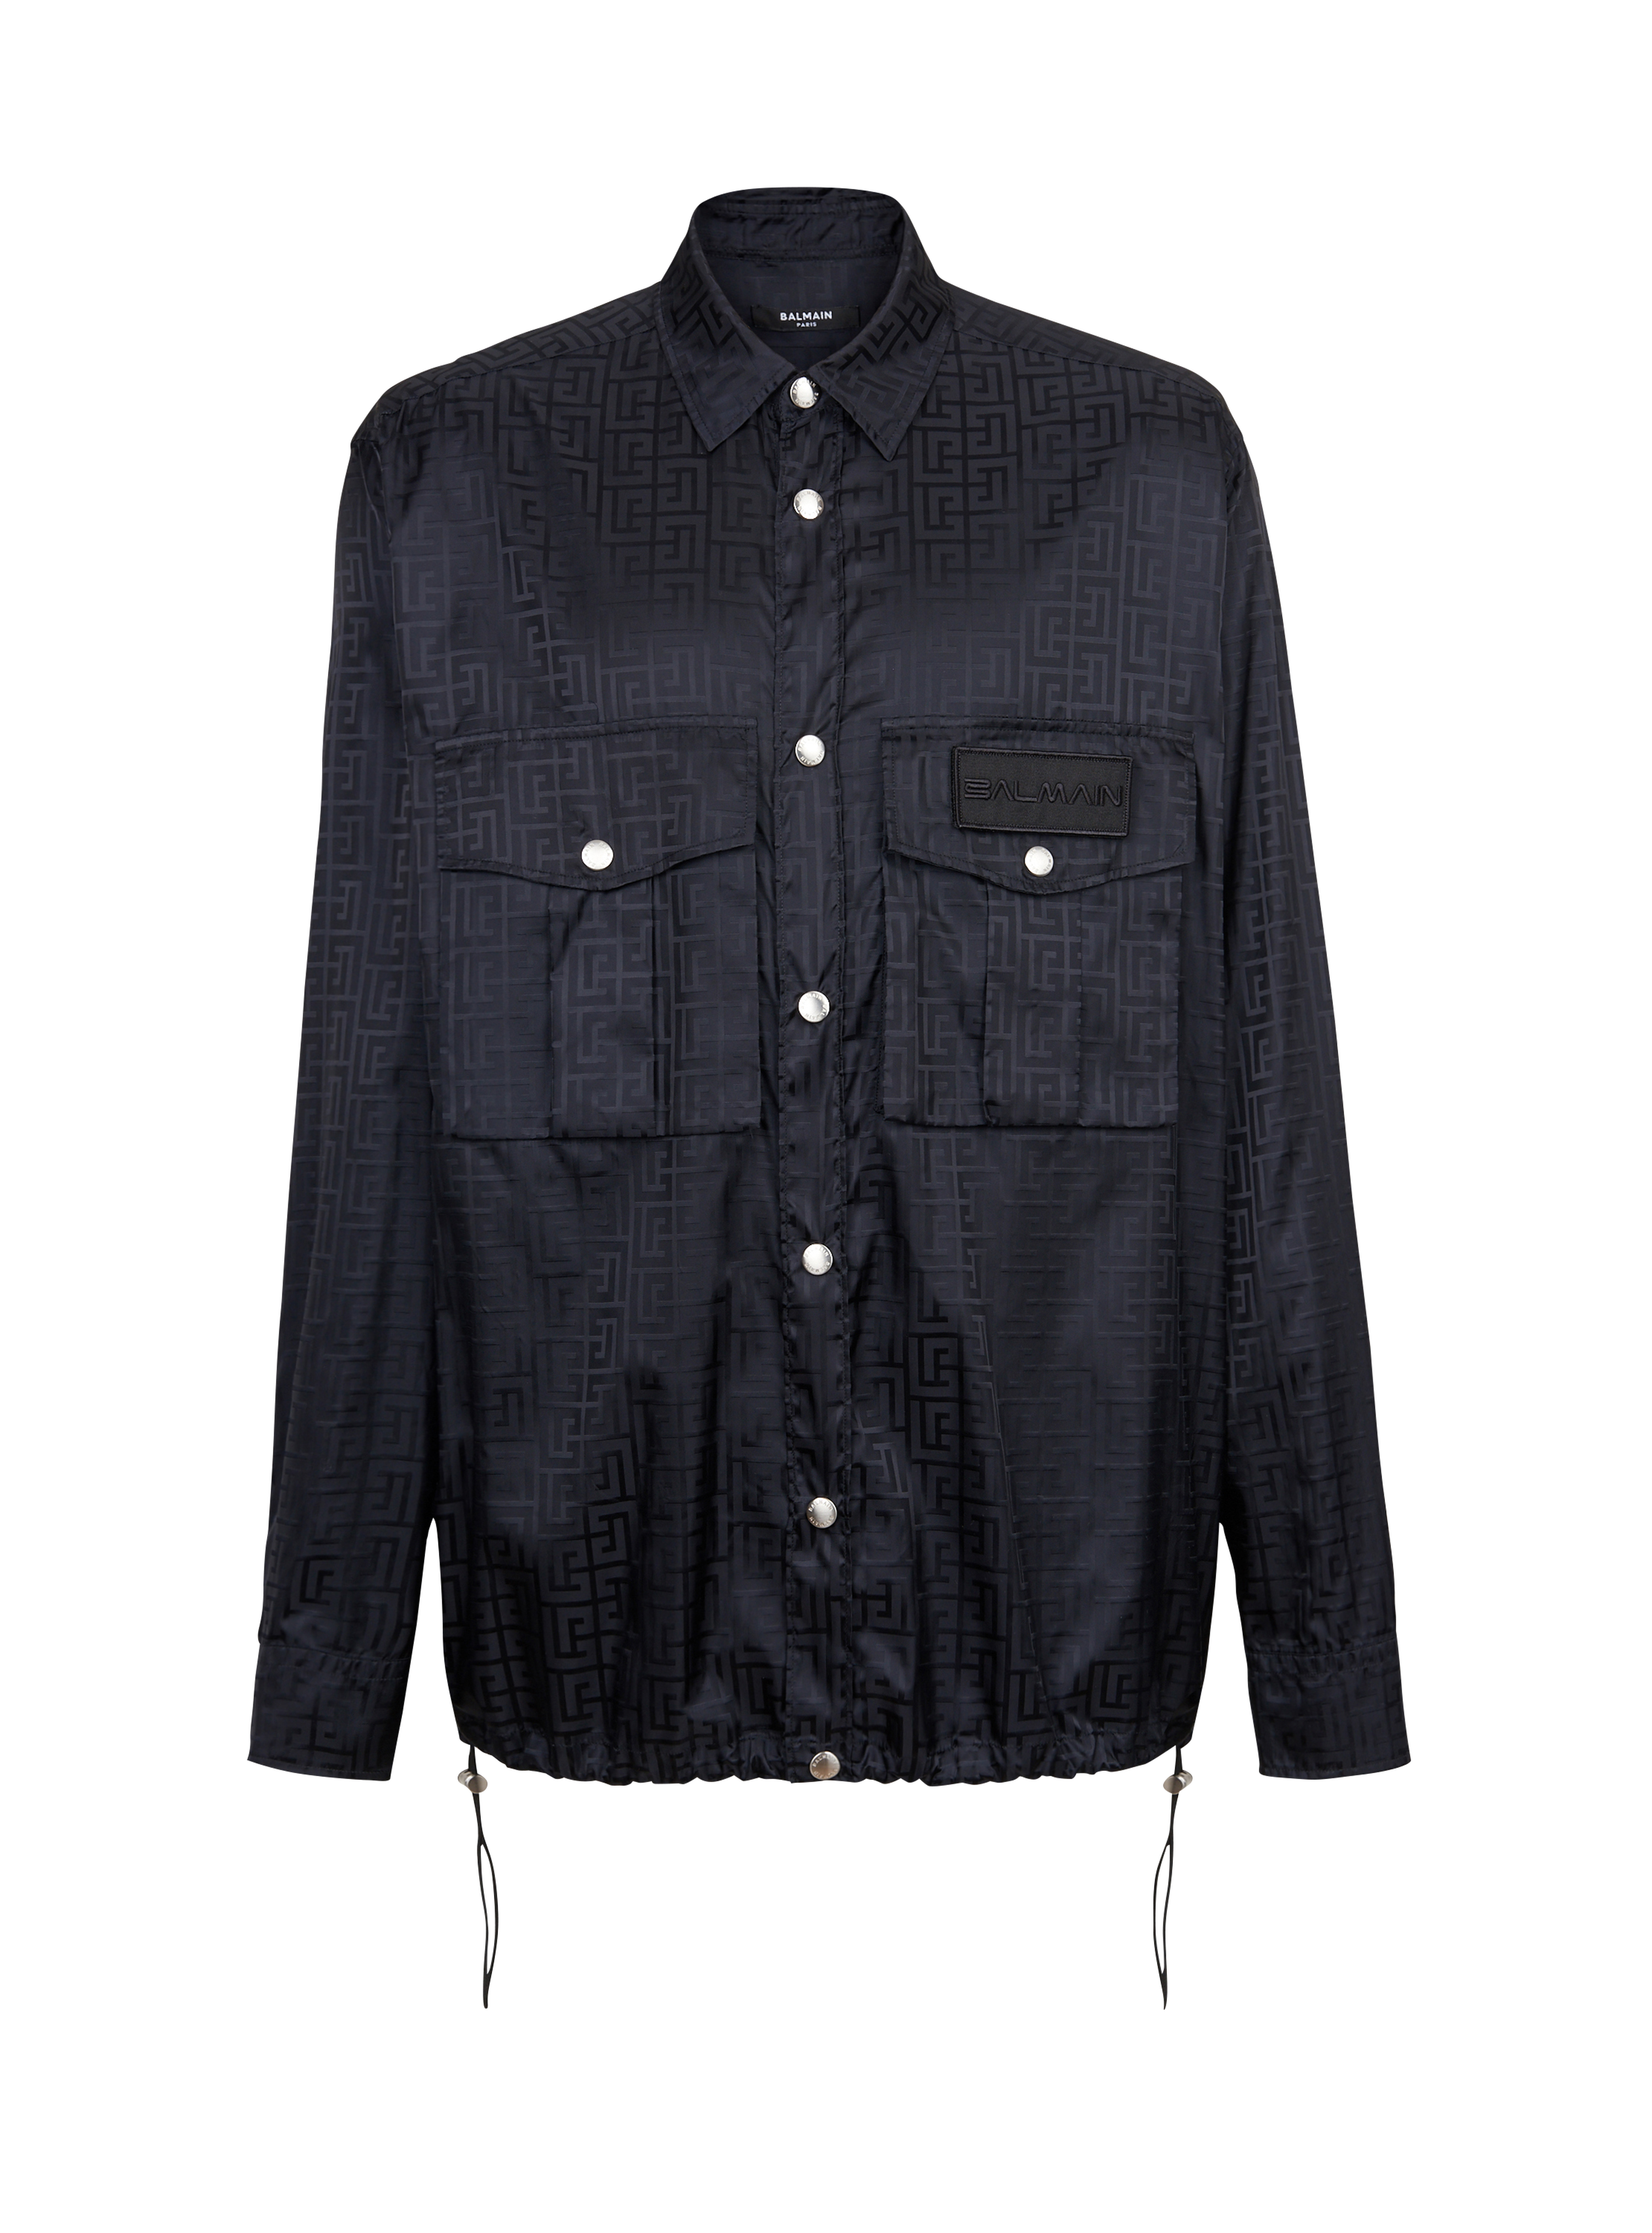 Nylon shirt with Balmain monogram, black